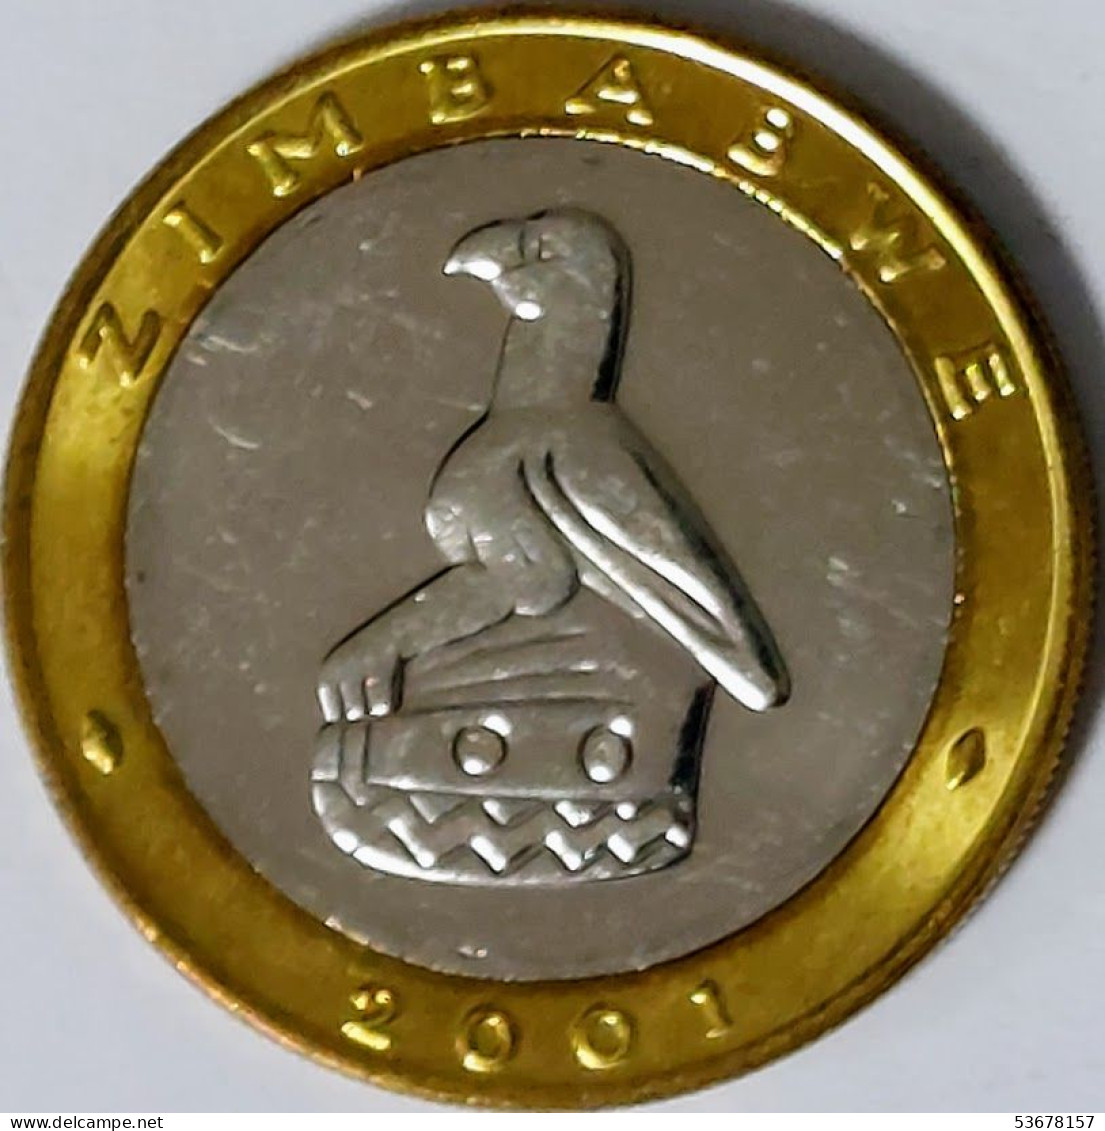 Zimbabwe - 5 Dollars 2001, KM# 13 (#2443) - Simbabwe